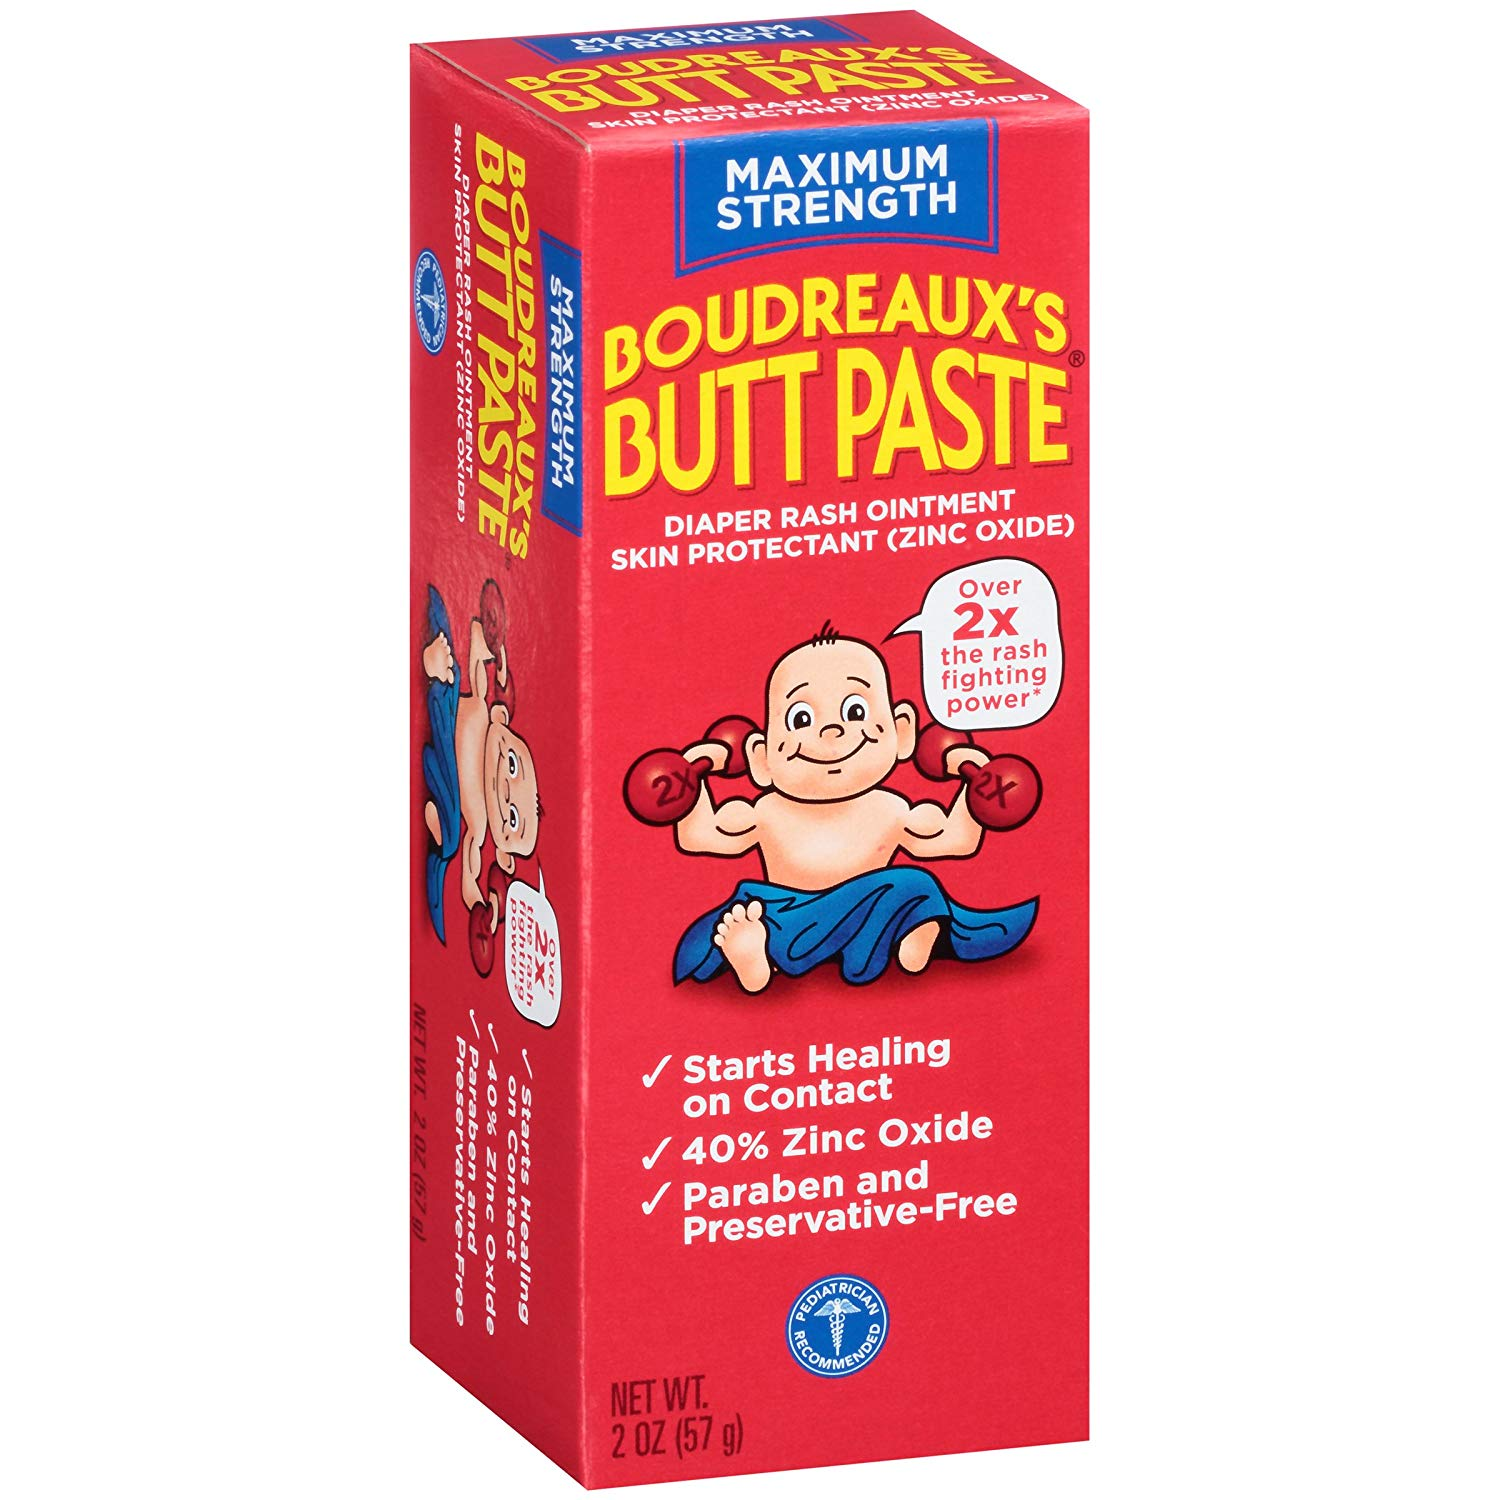 Boudreaux’s Butt Paste Diaper Rash Ointment Only $4.69 Shipped!